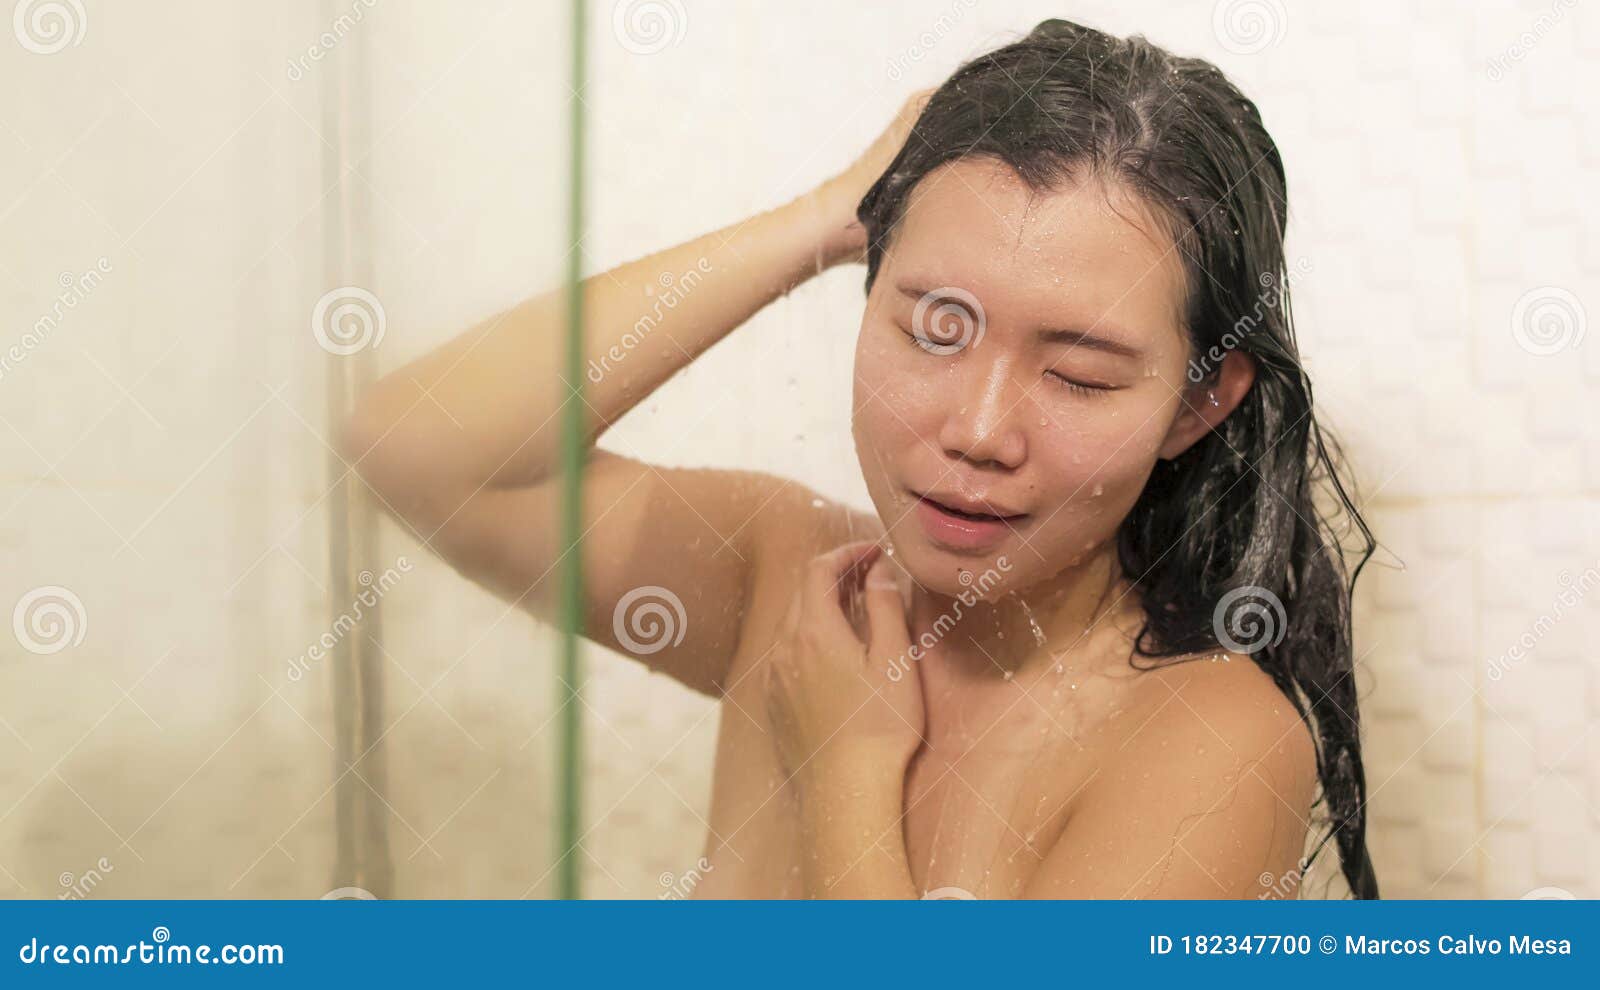 Talking to Asian girl Neneth in the bathroom